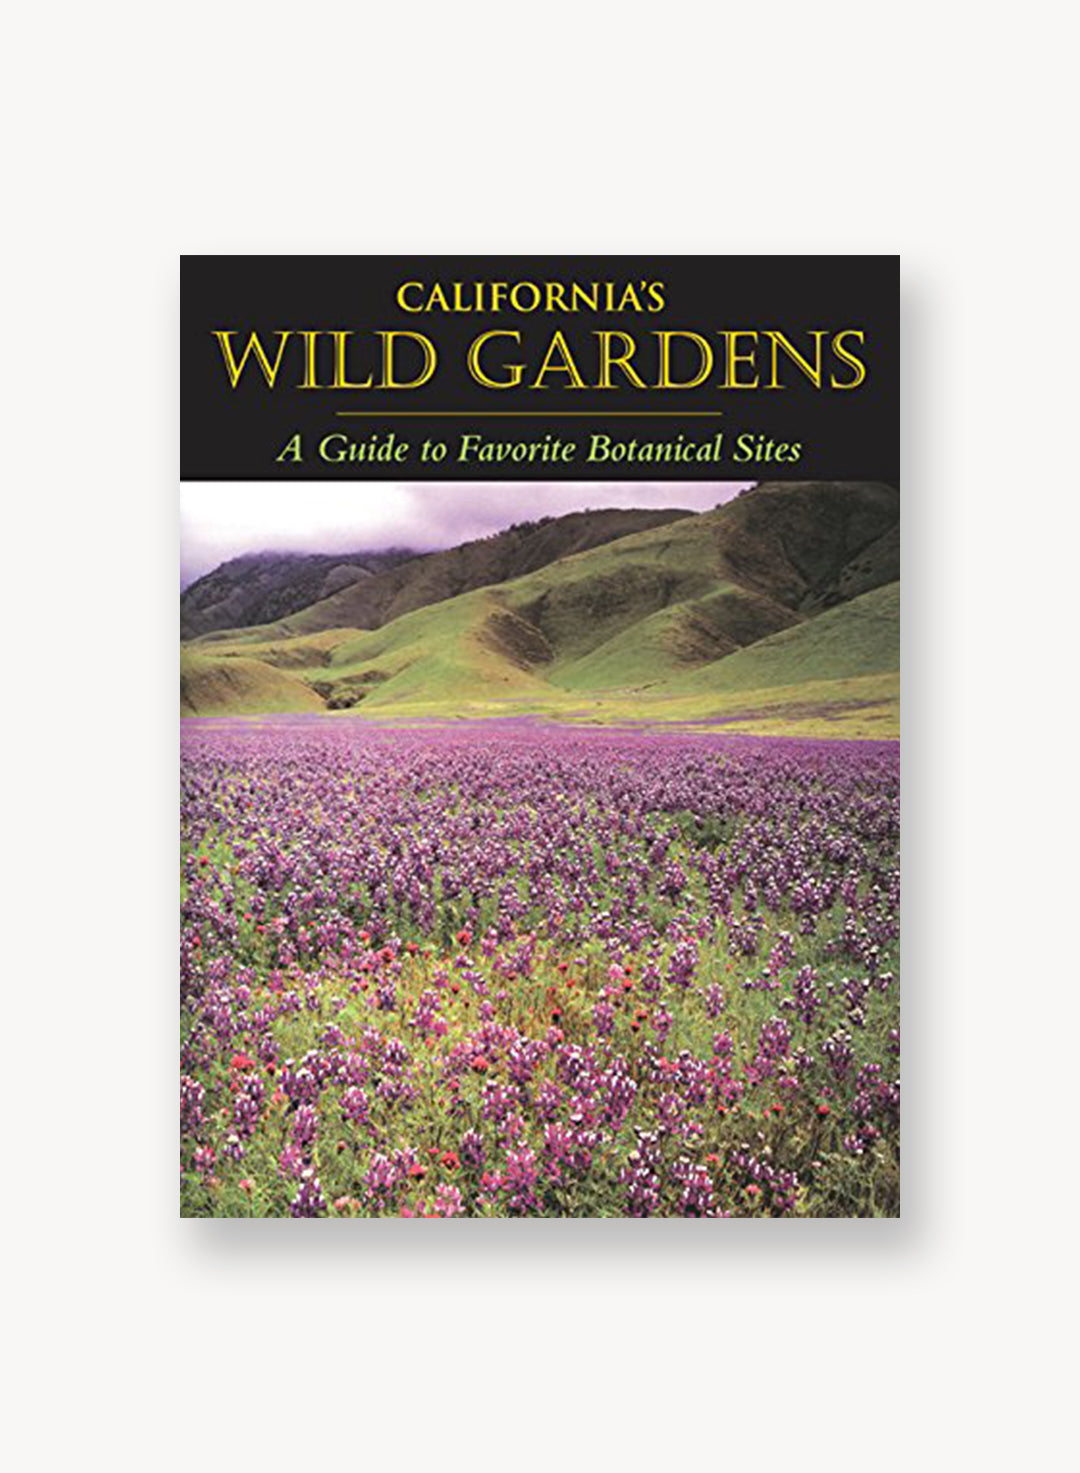 California's Wild Gardens: A Guide to Favorite Botanical Sites